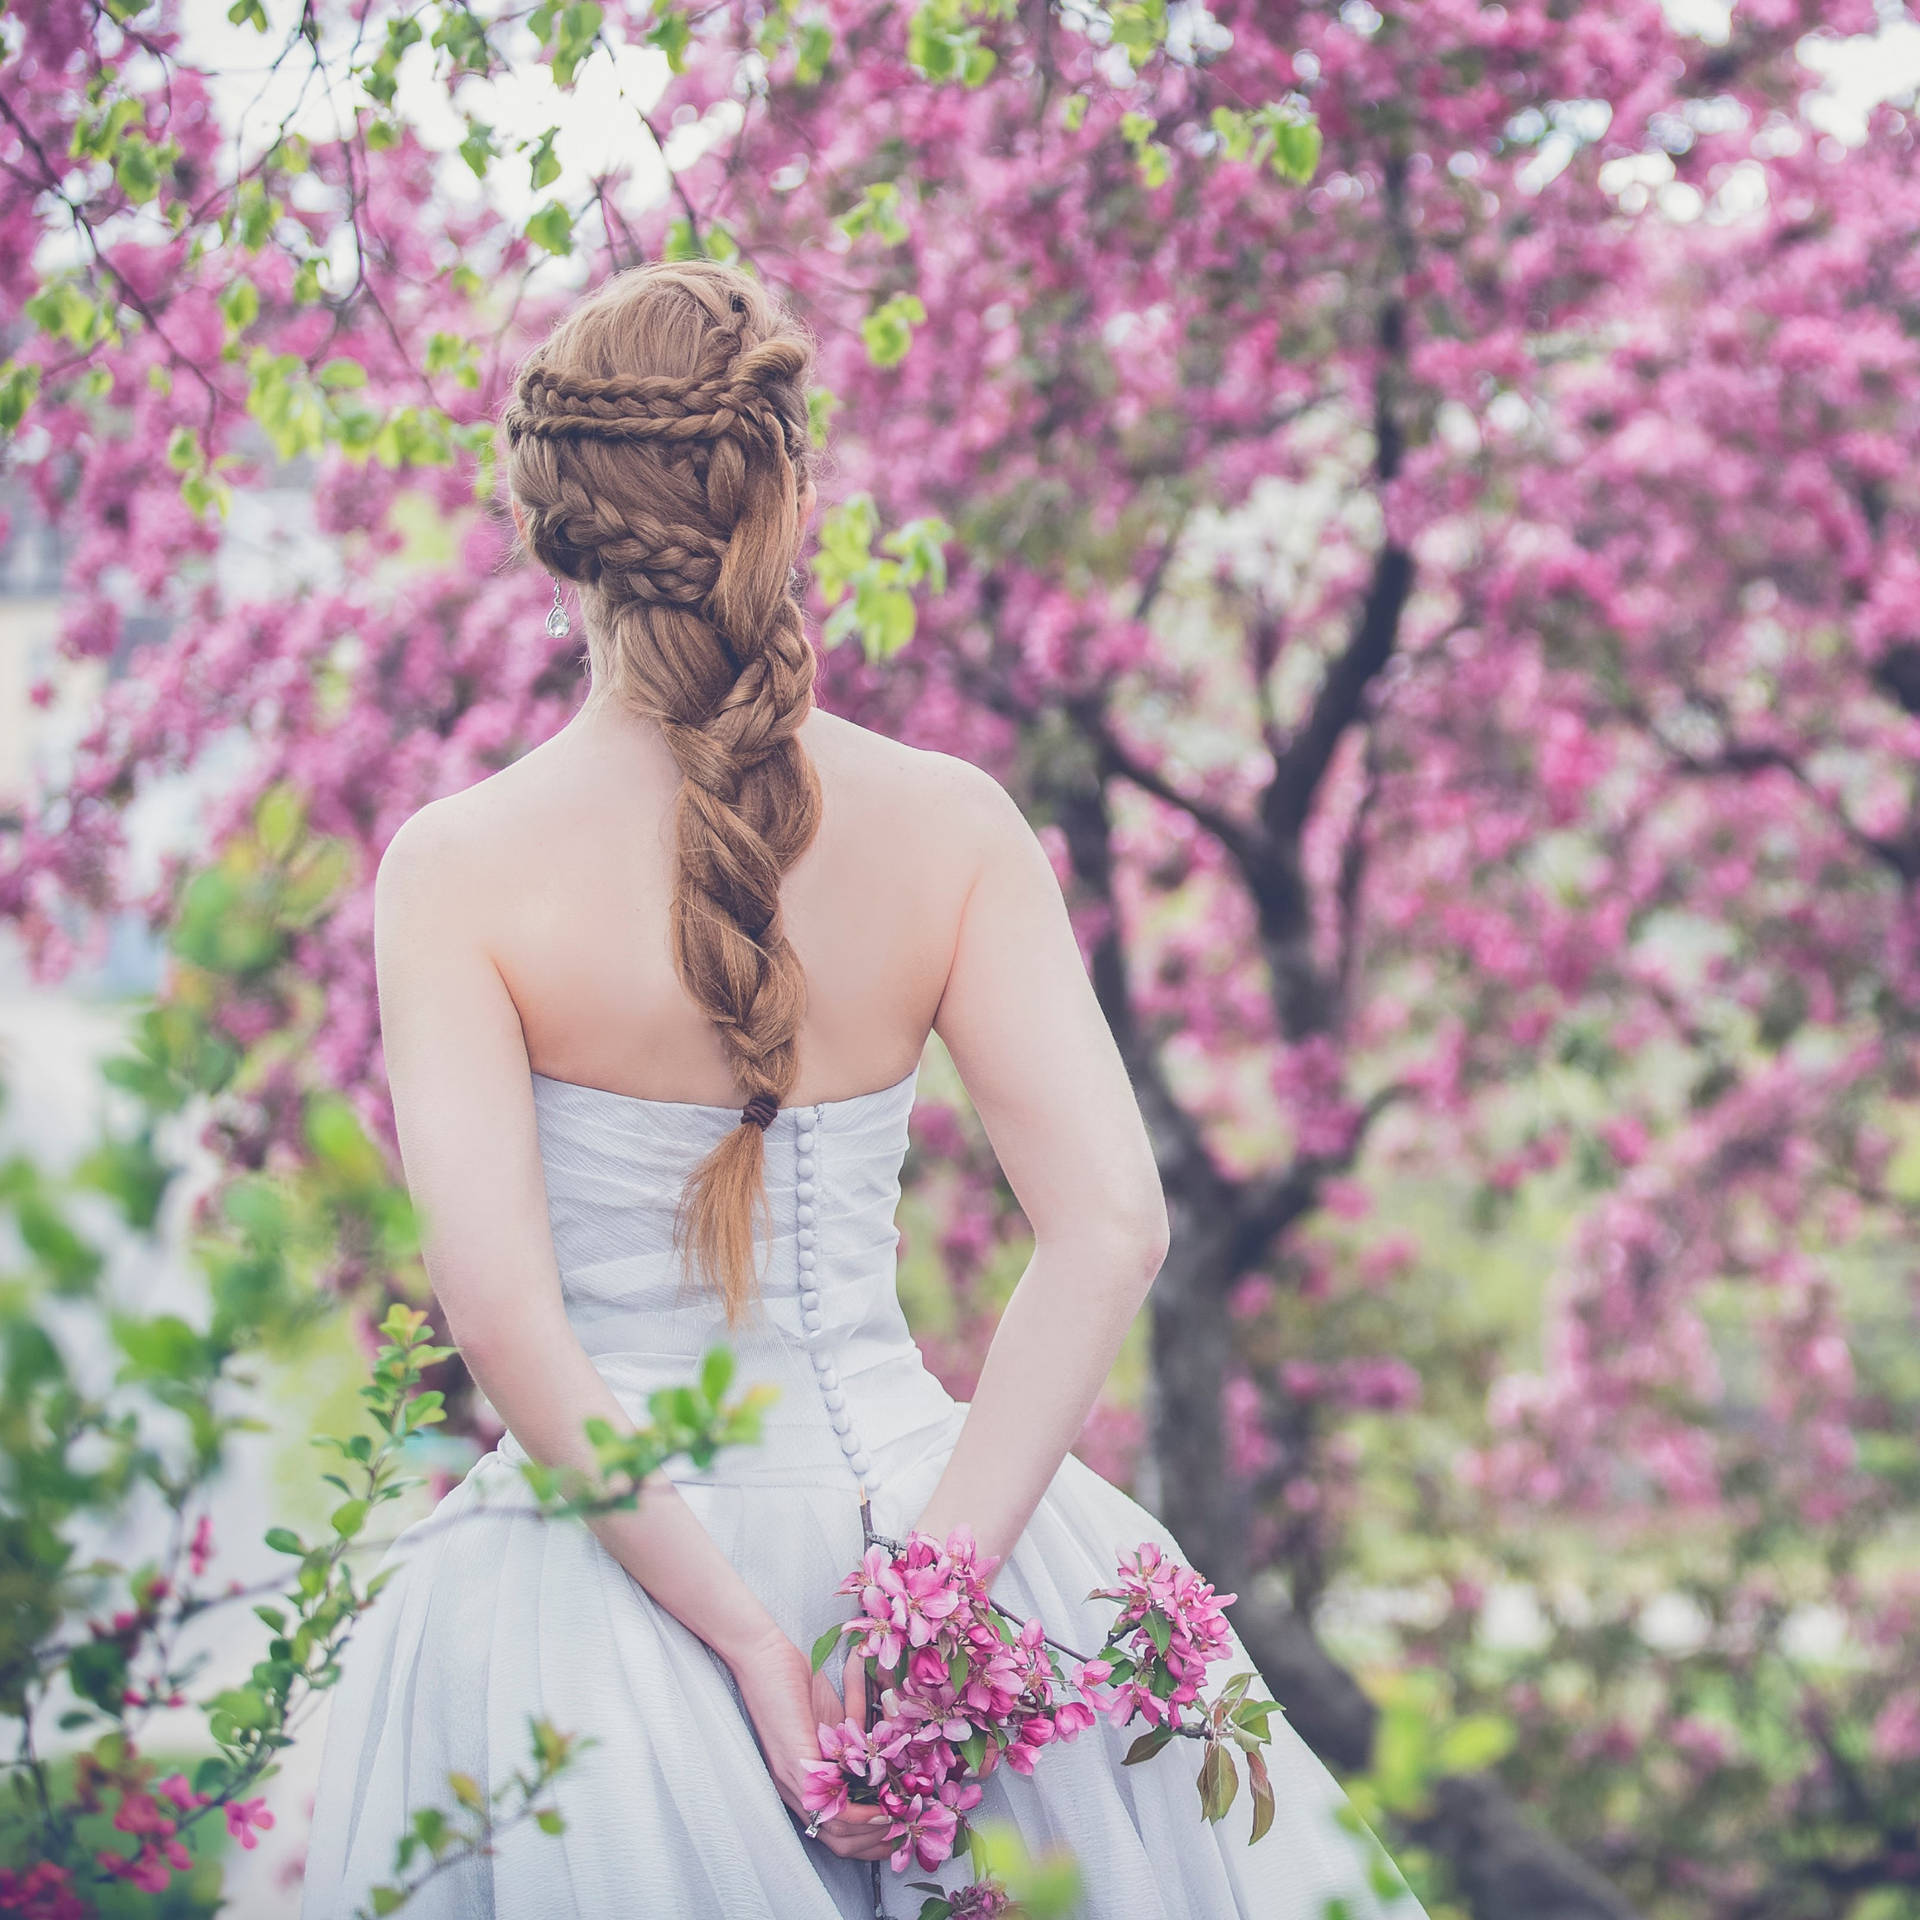 Bridal Walk Among Pink Flowers Wallpaper